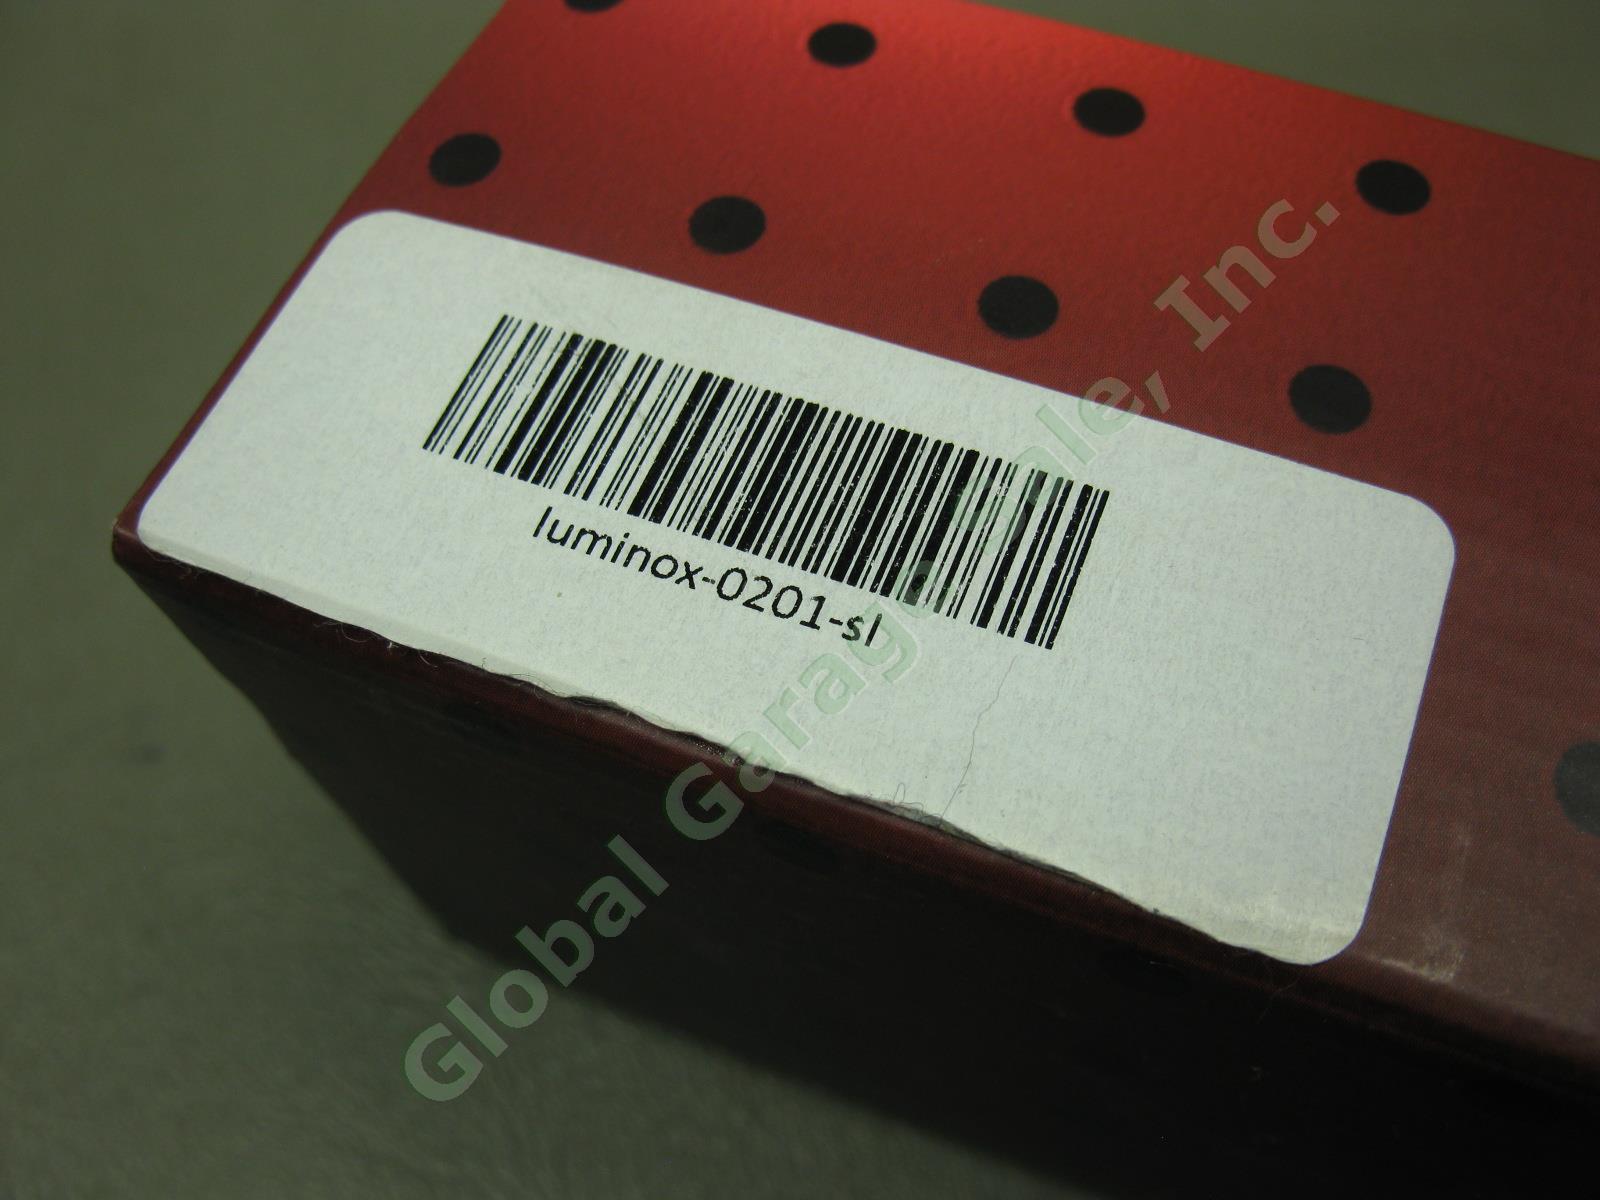 Luminox Sentry 0201SL Quartz Watch W/ Black Case Rubber Band Box Manual +Tag Lot 6